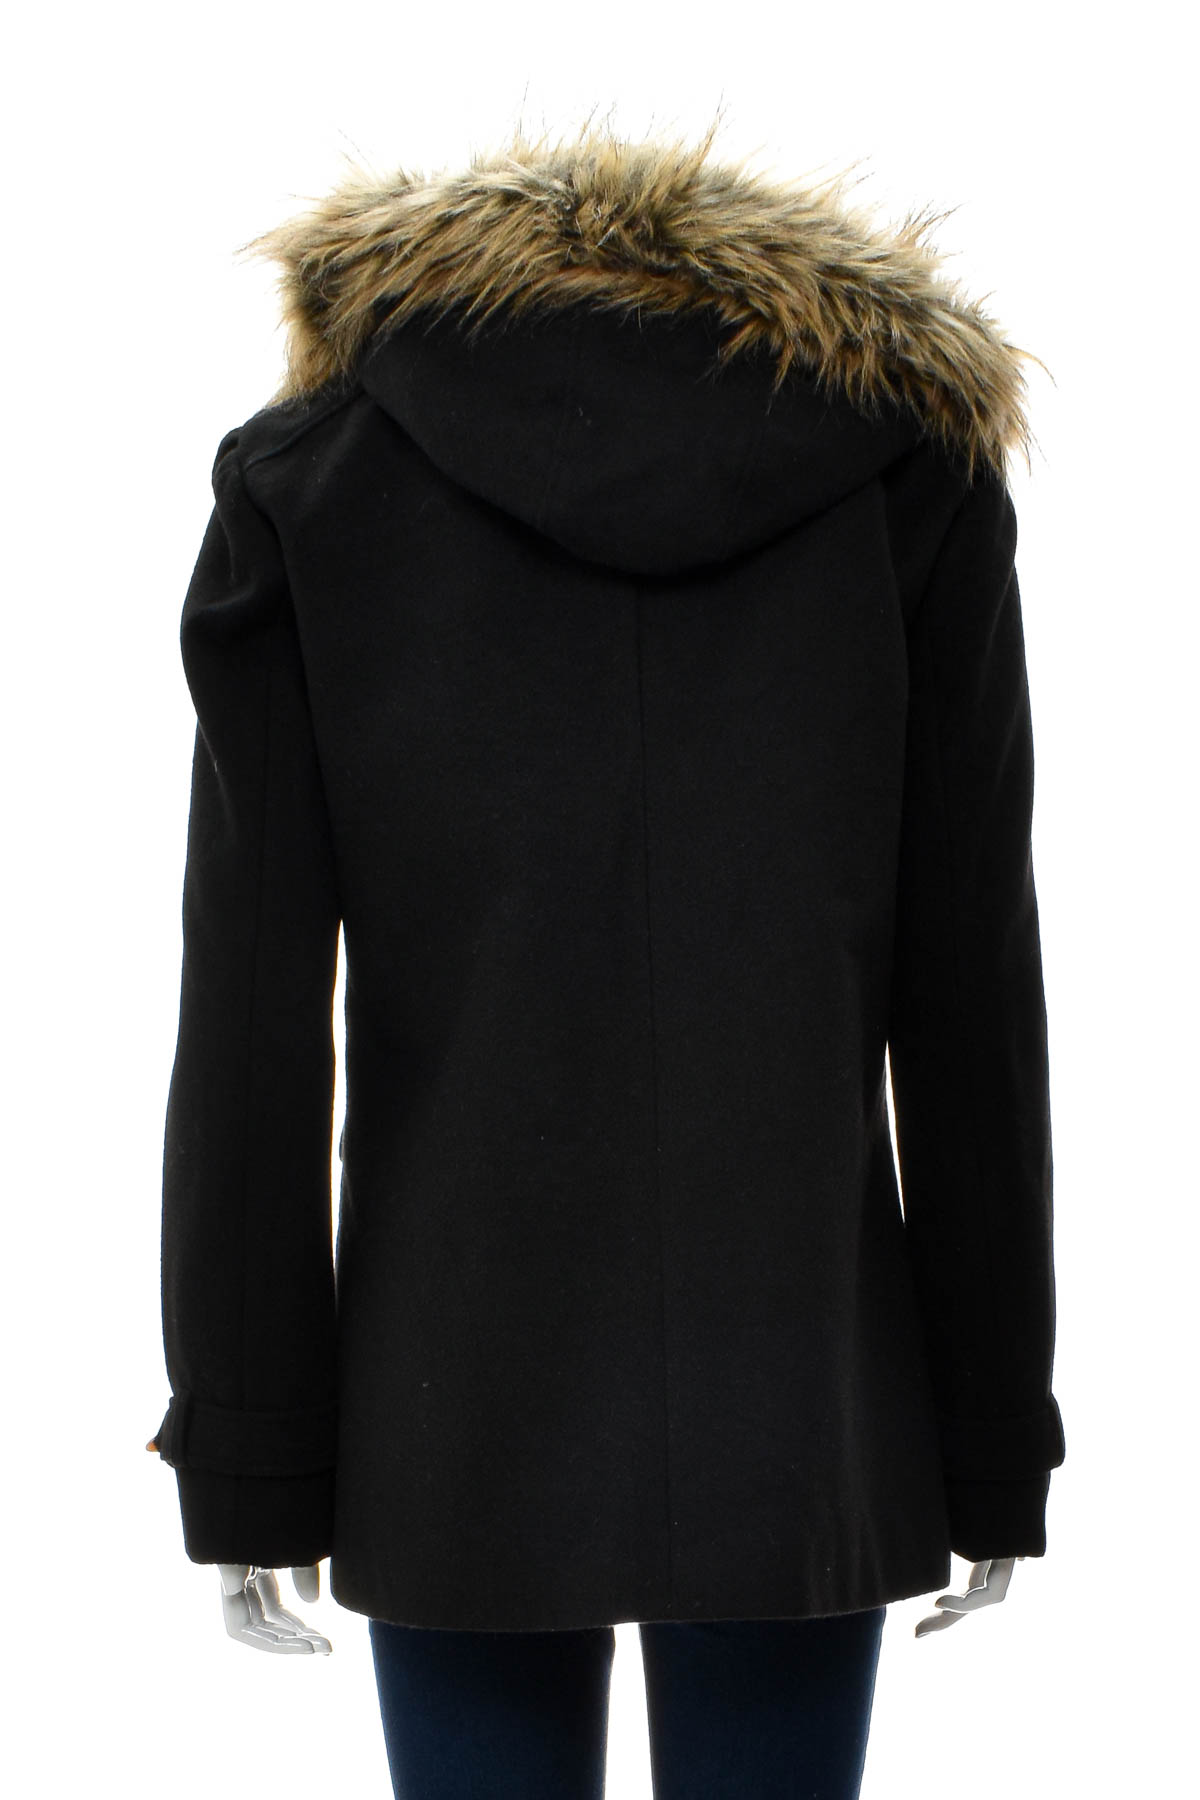 Women's coat - TOM TAILOR Denim - 1